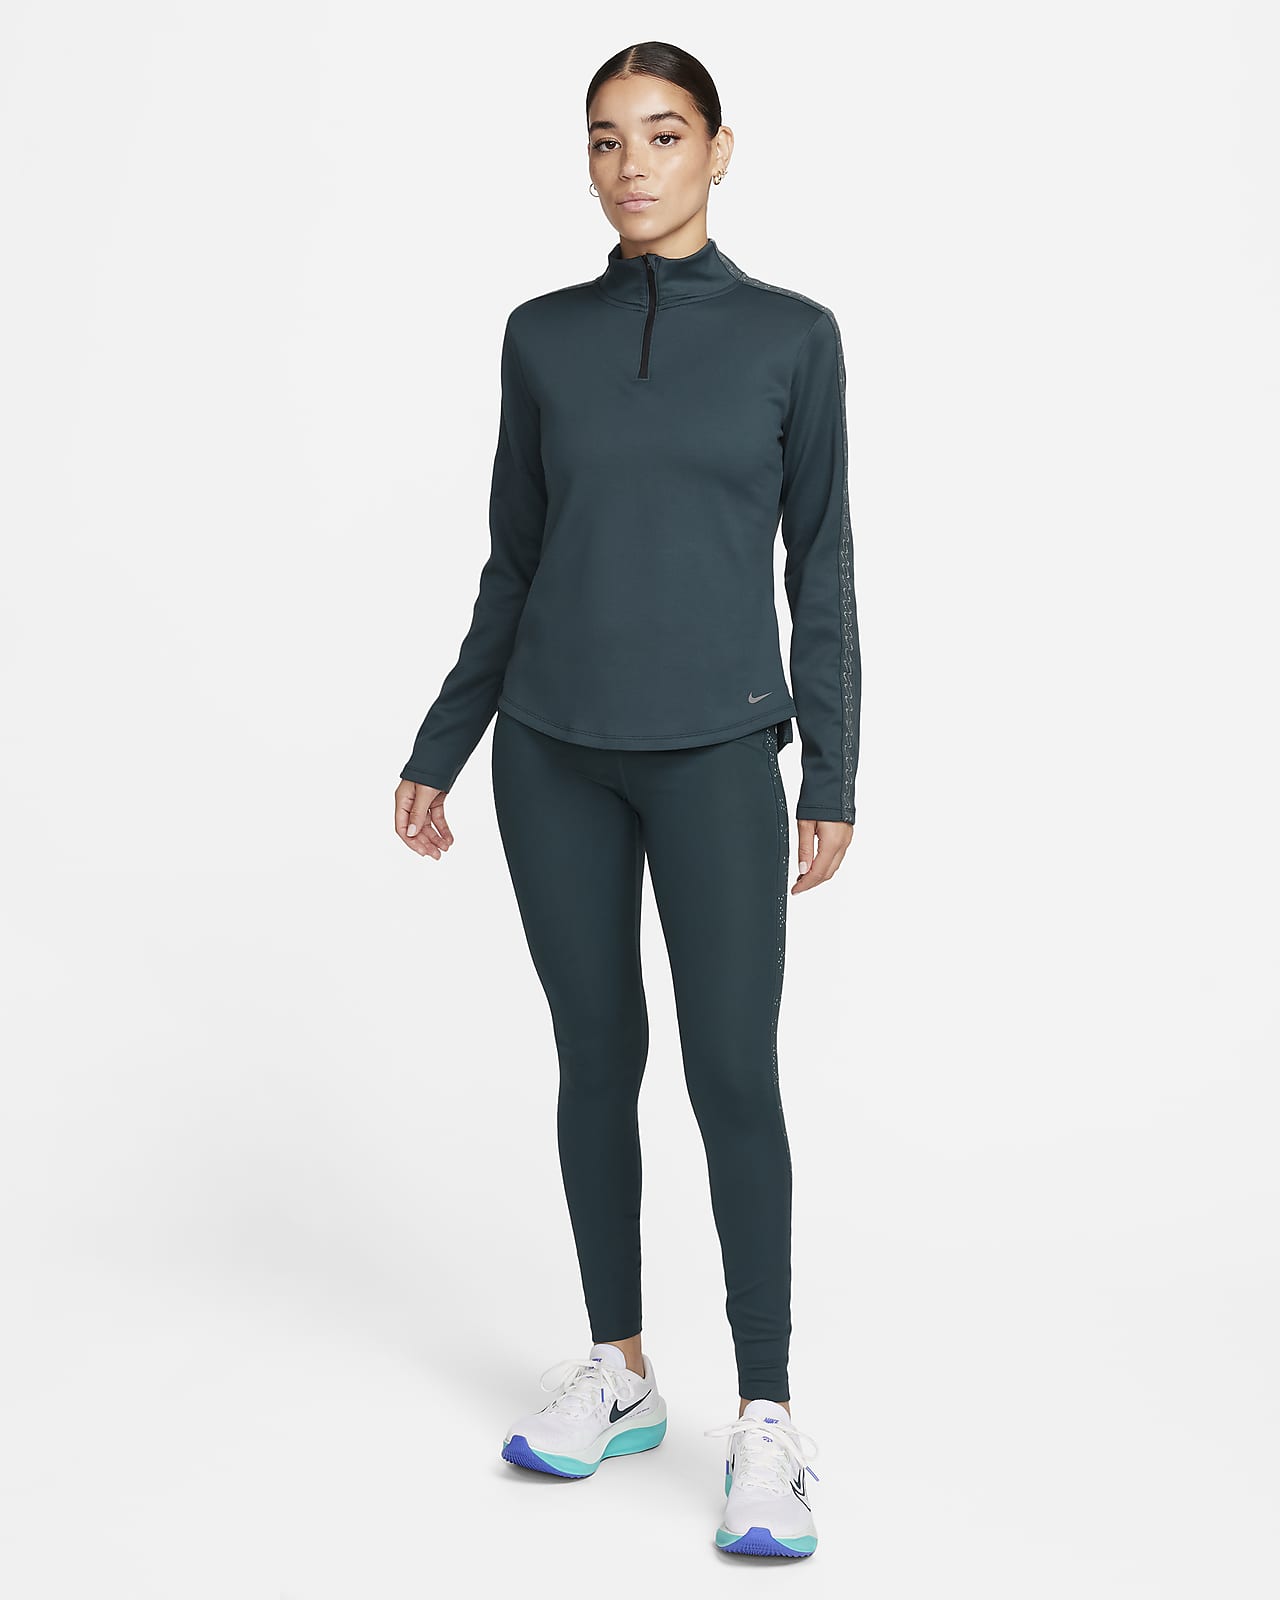 Nike sz S Women's POWER SPEED Running Capris NEW $110 801694 435 Blue /  Black